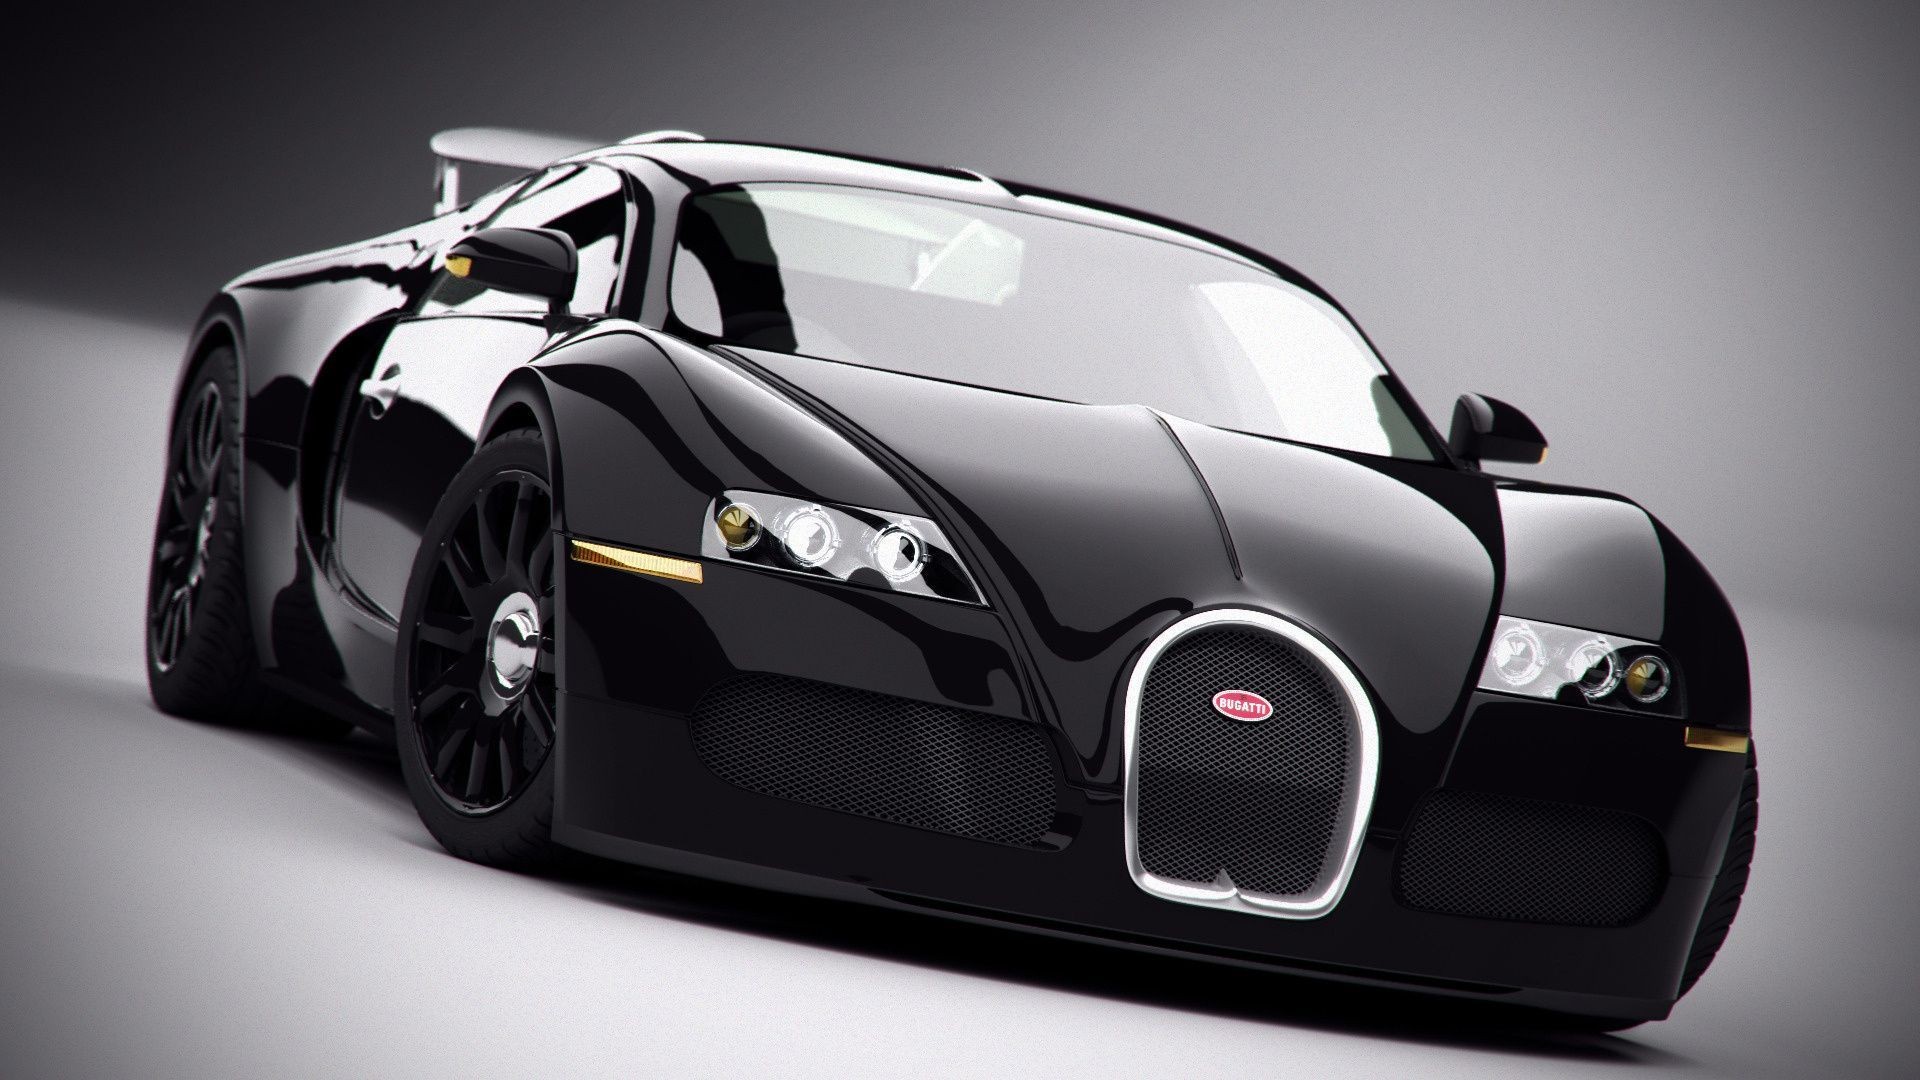 Bugatti Veyron Papercraft 10 World S Most Expensive Cars Owned by Celebrities Bugatti